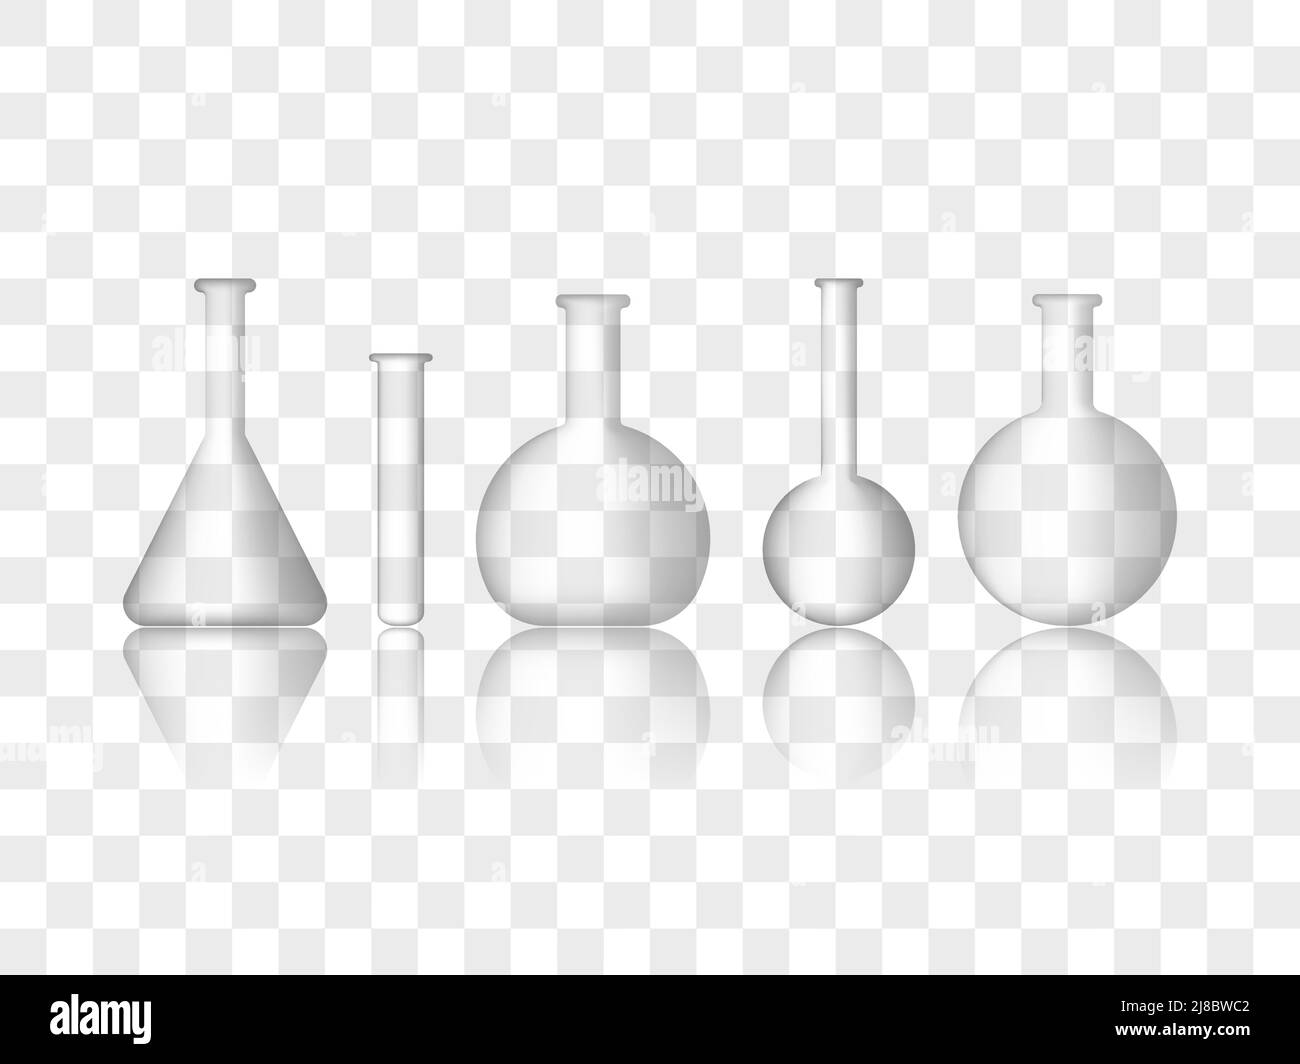 Flask, laboratory, chemistry set. Vector illustration. Stock Vector